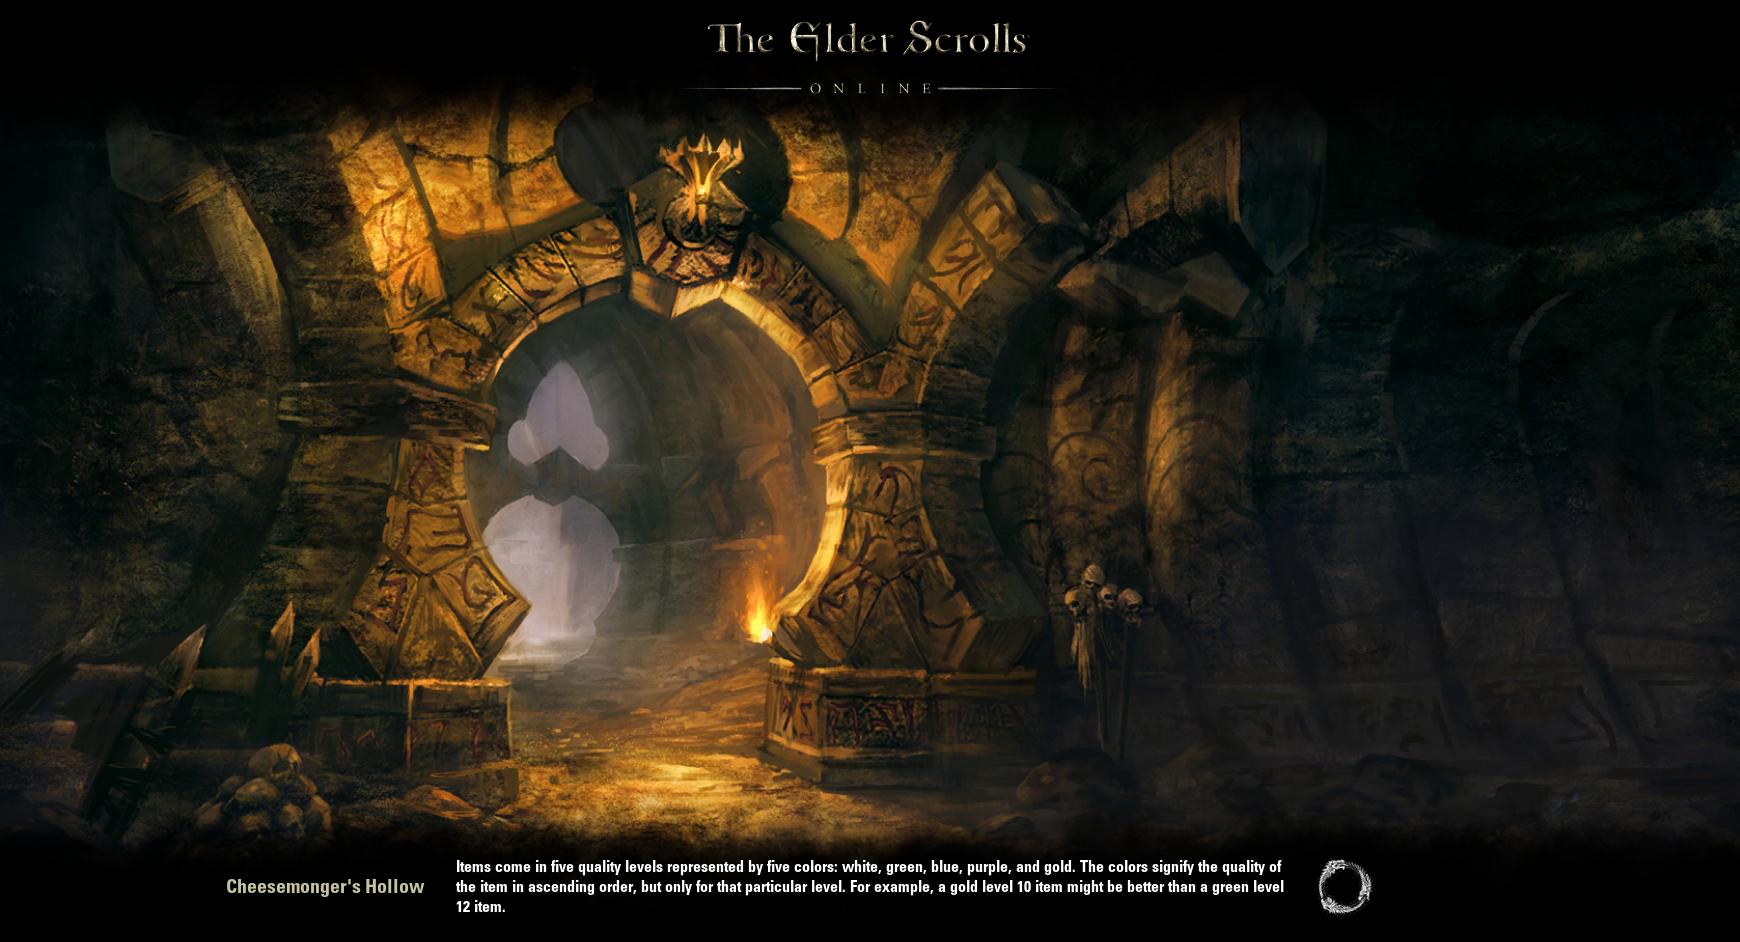 The Elder Scrolls Online load screens